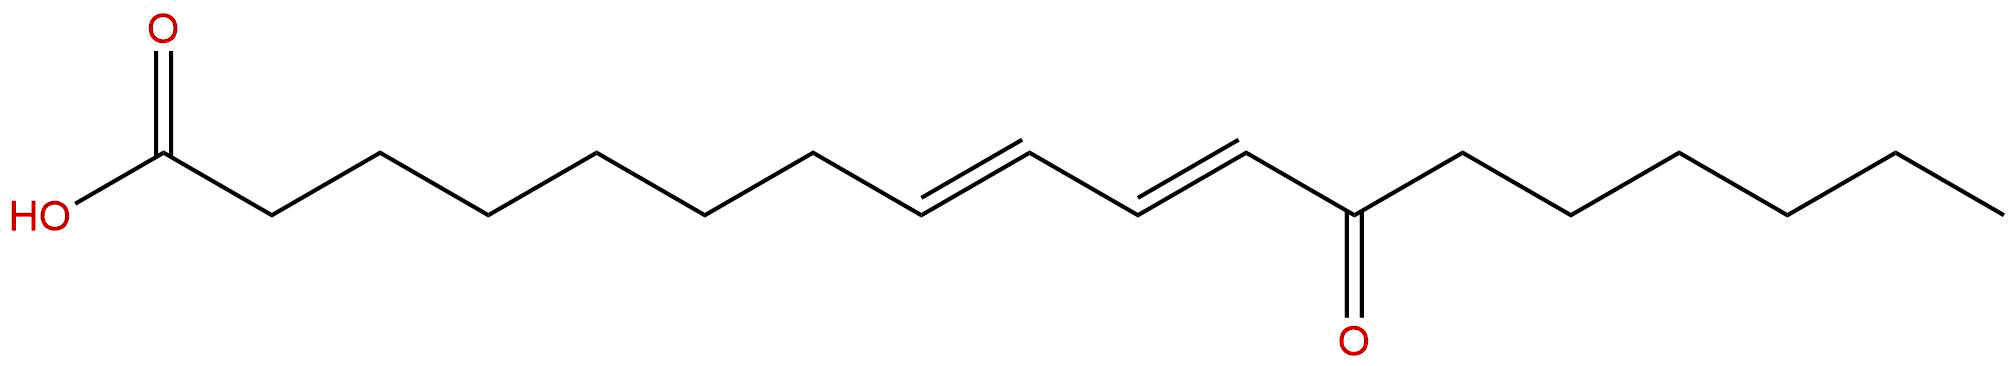 Rabdosia acid A